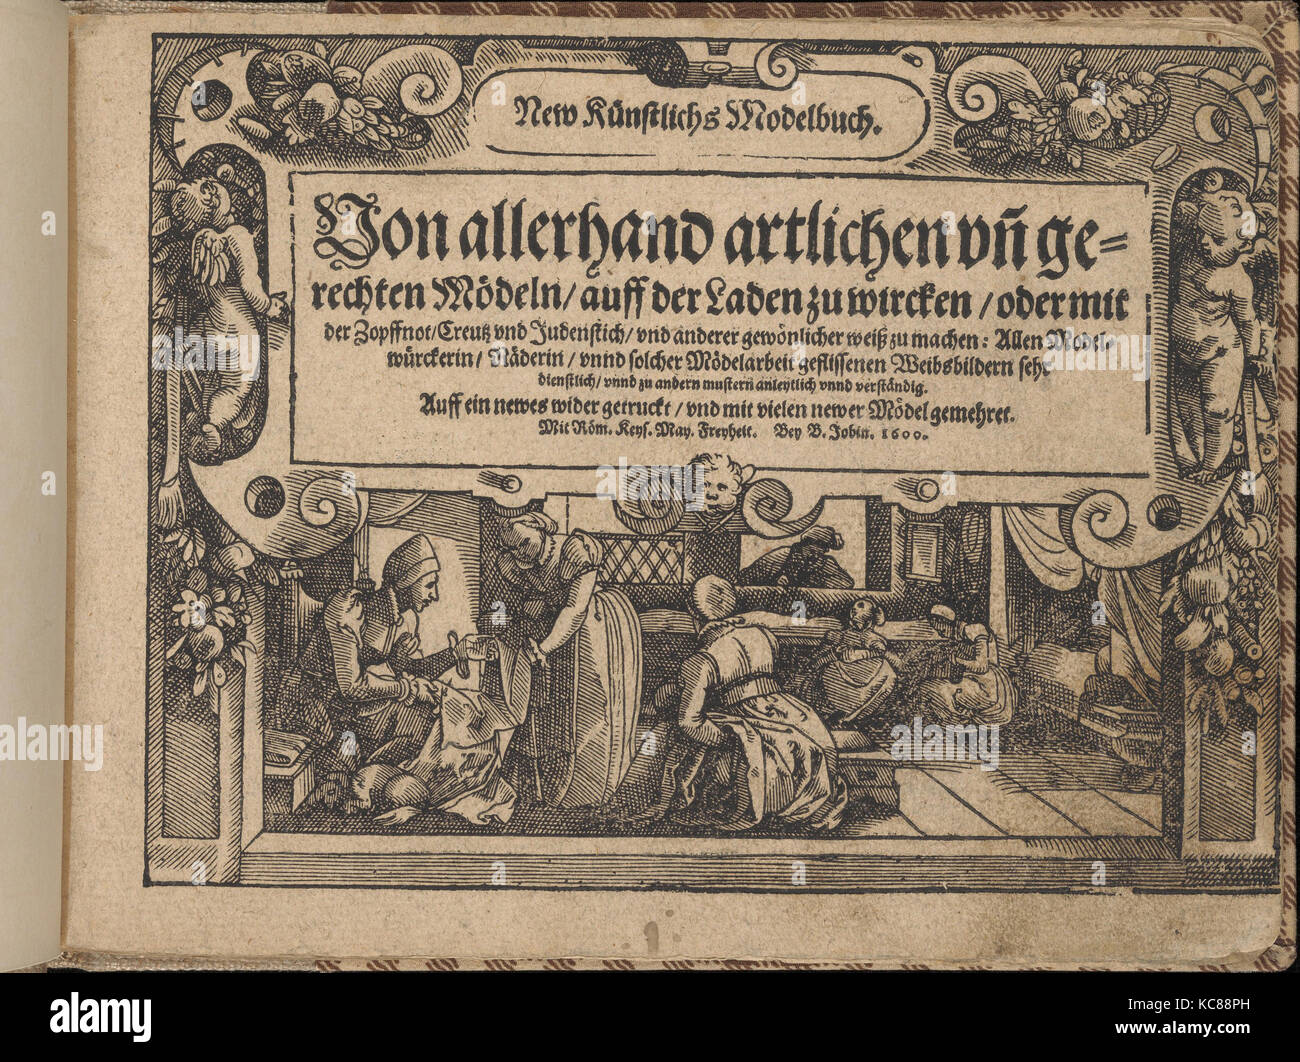 New Künstlichs Modelbuch, 1600, Woodcut, Overall: 6 5/16 x 8 1/4 in. (16 x 21 cm), Published by Bernhard Jobin, Strassburg Stock Photo